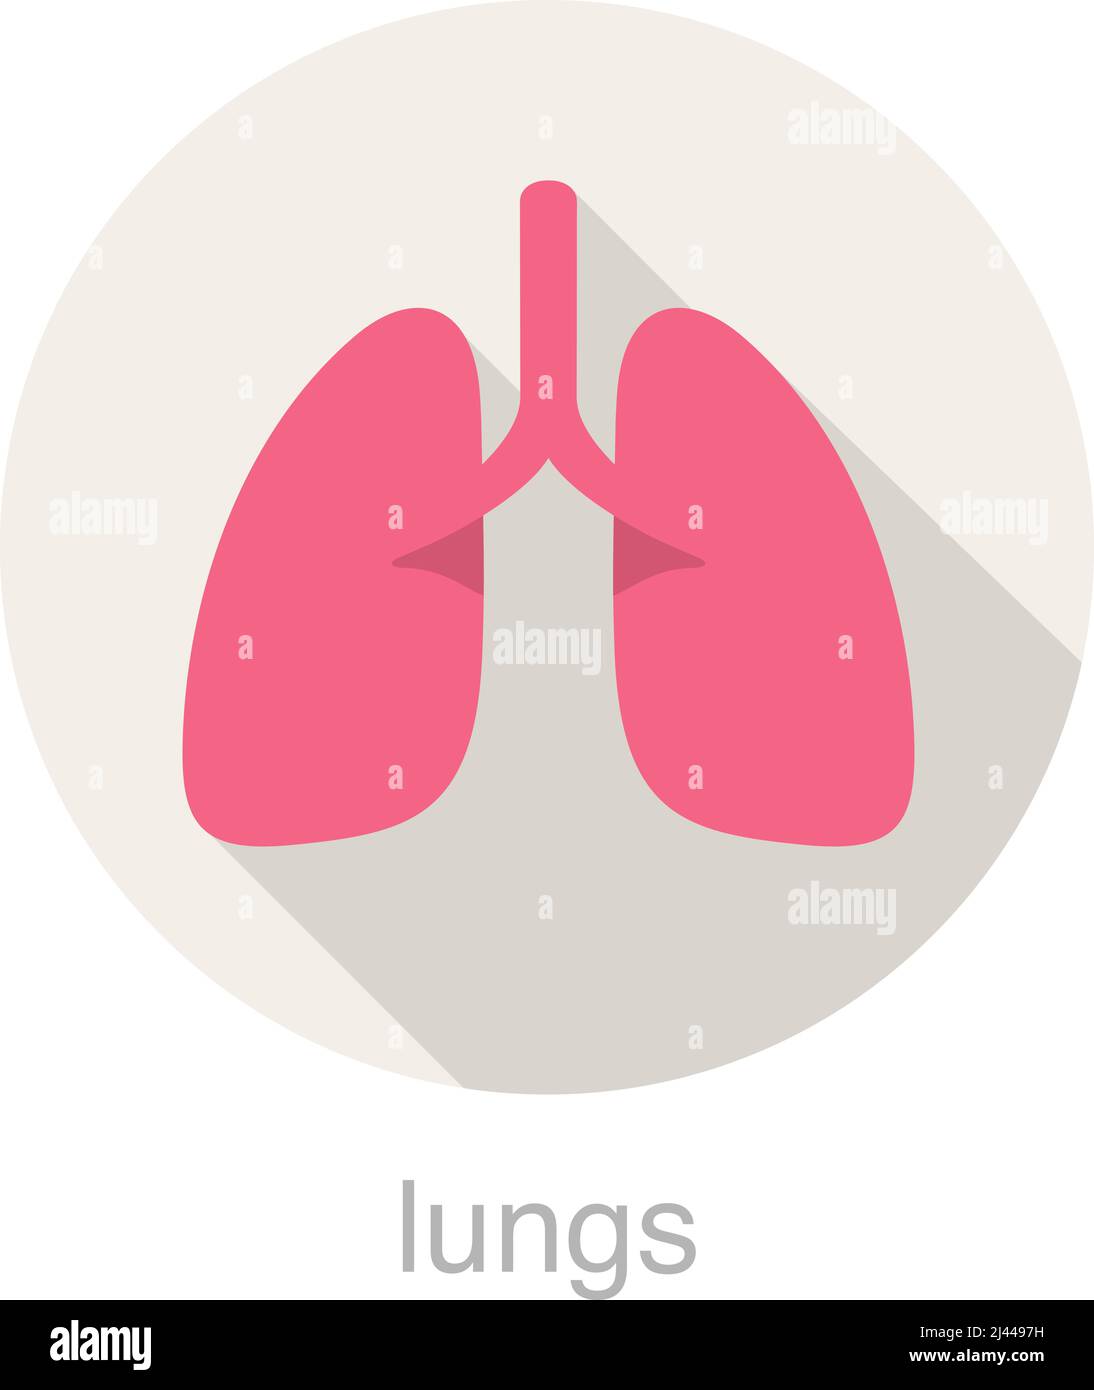 Human organ lungs flat design icon, vector illustration Stock Vector